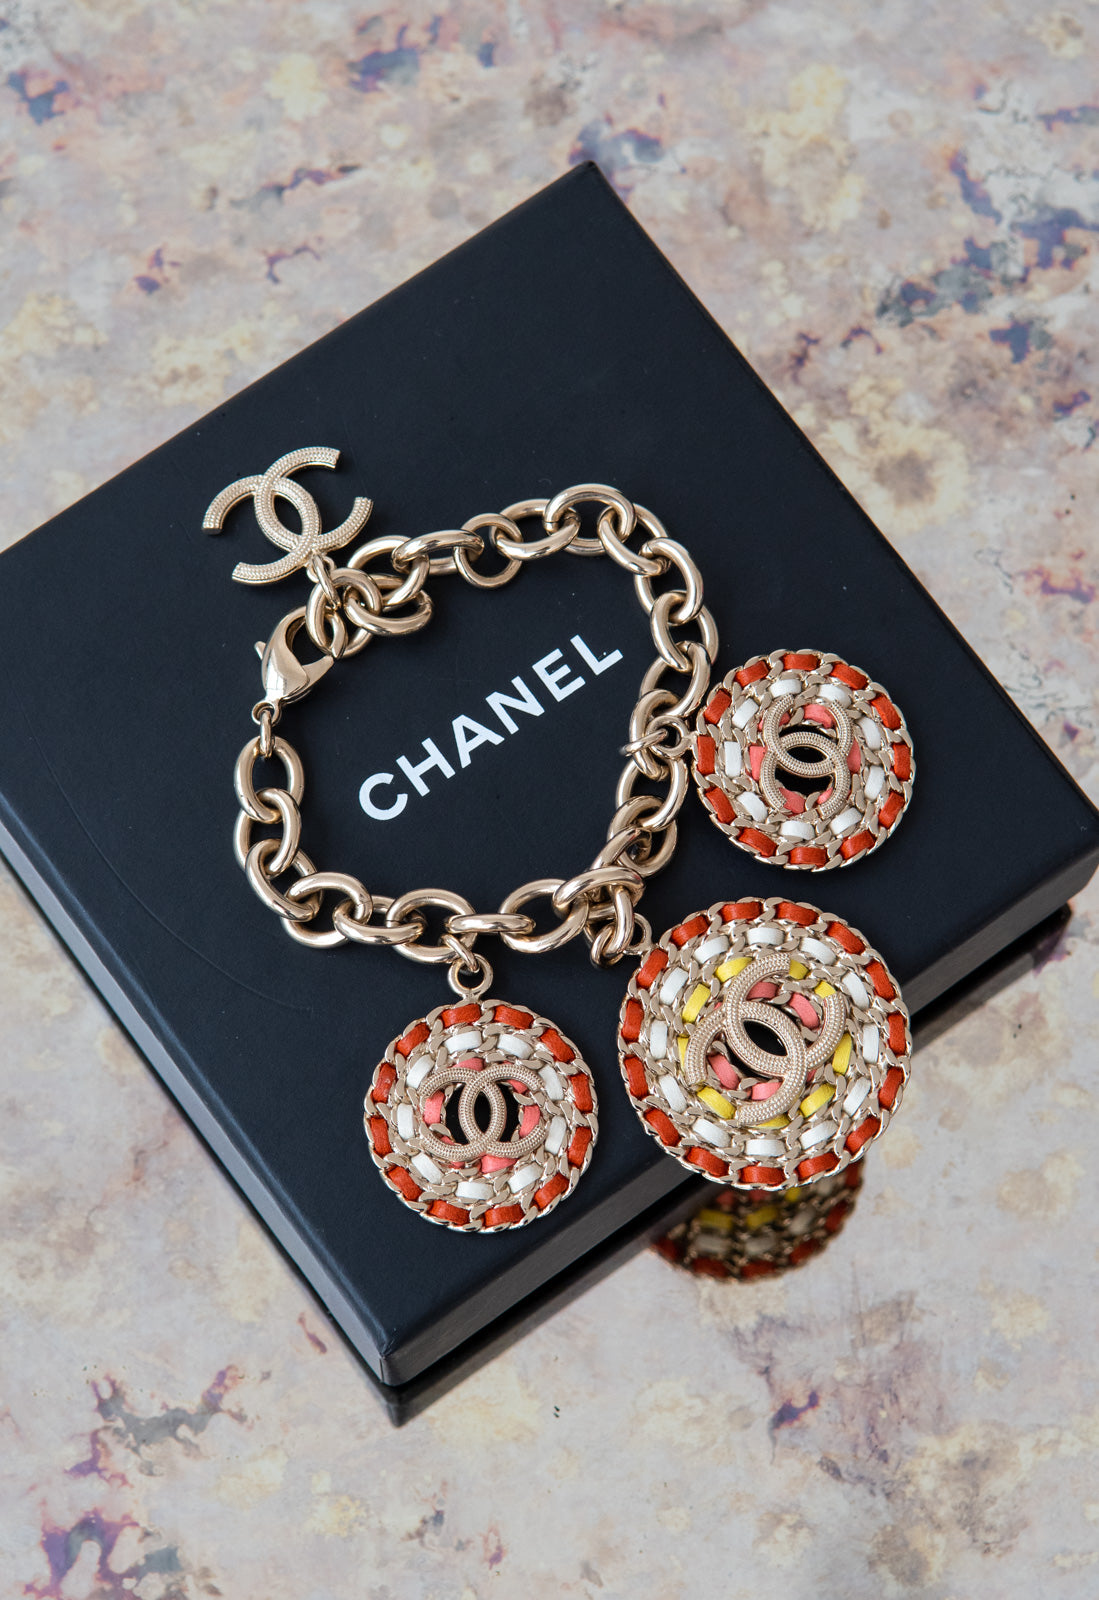 Chanel Medallion Bracelet - Image 3 of 4